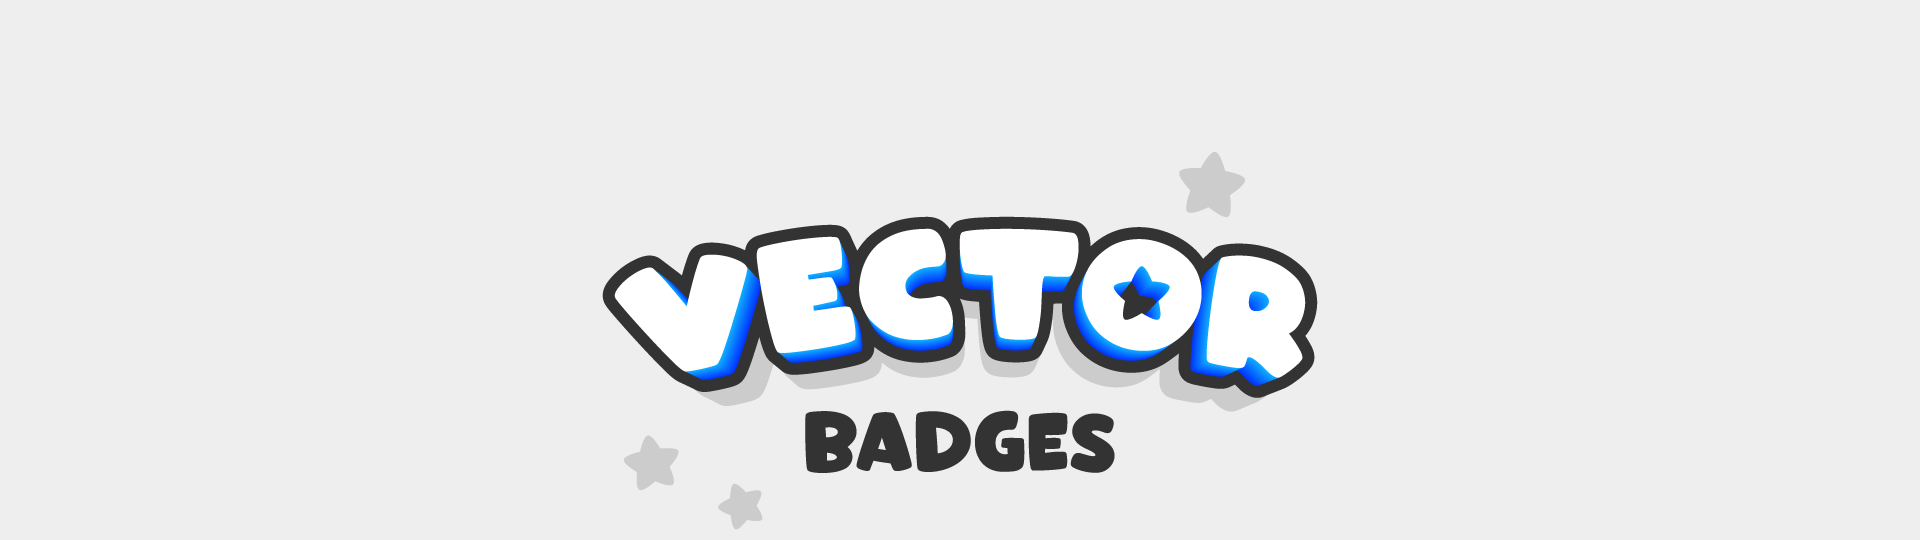 Vector Badges - Pro Upgrade